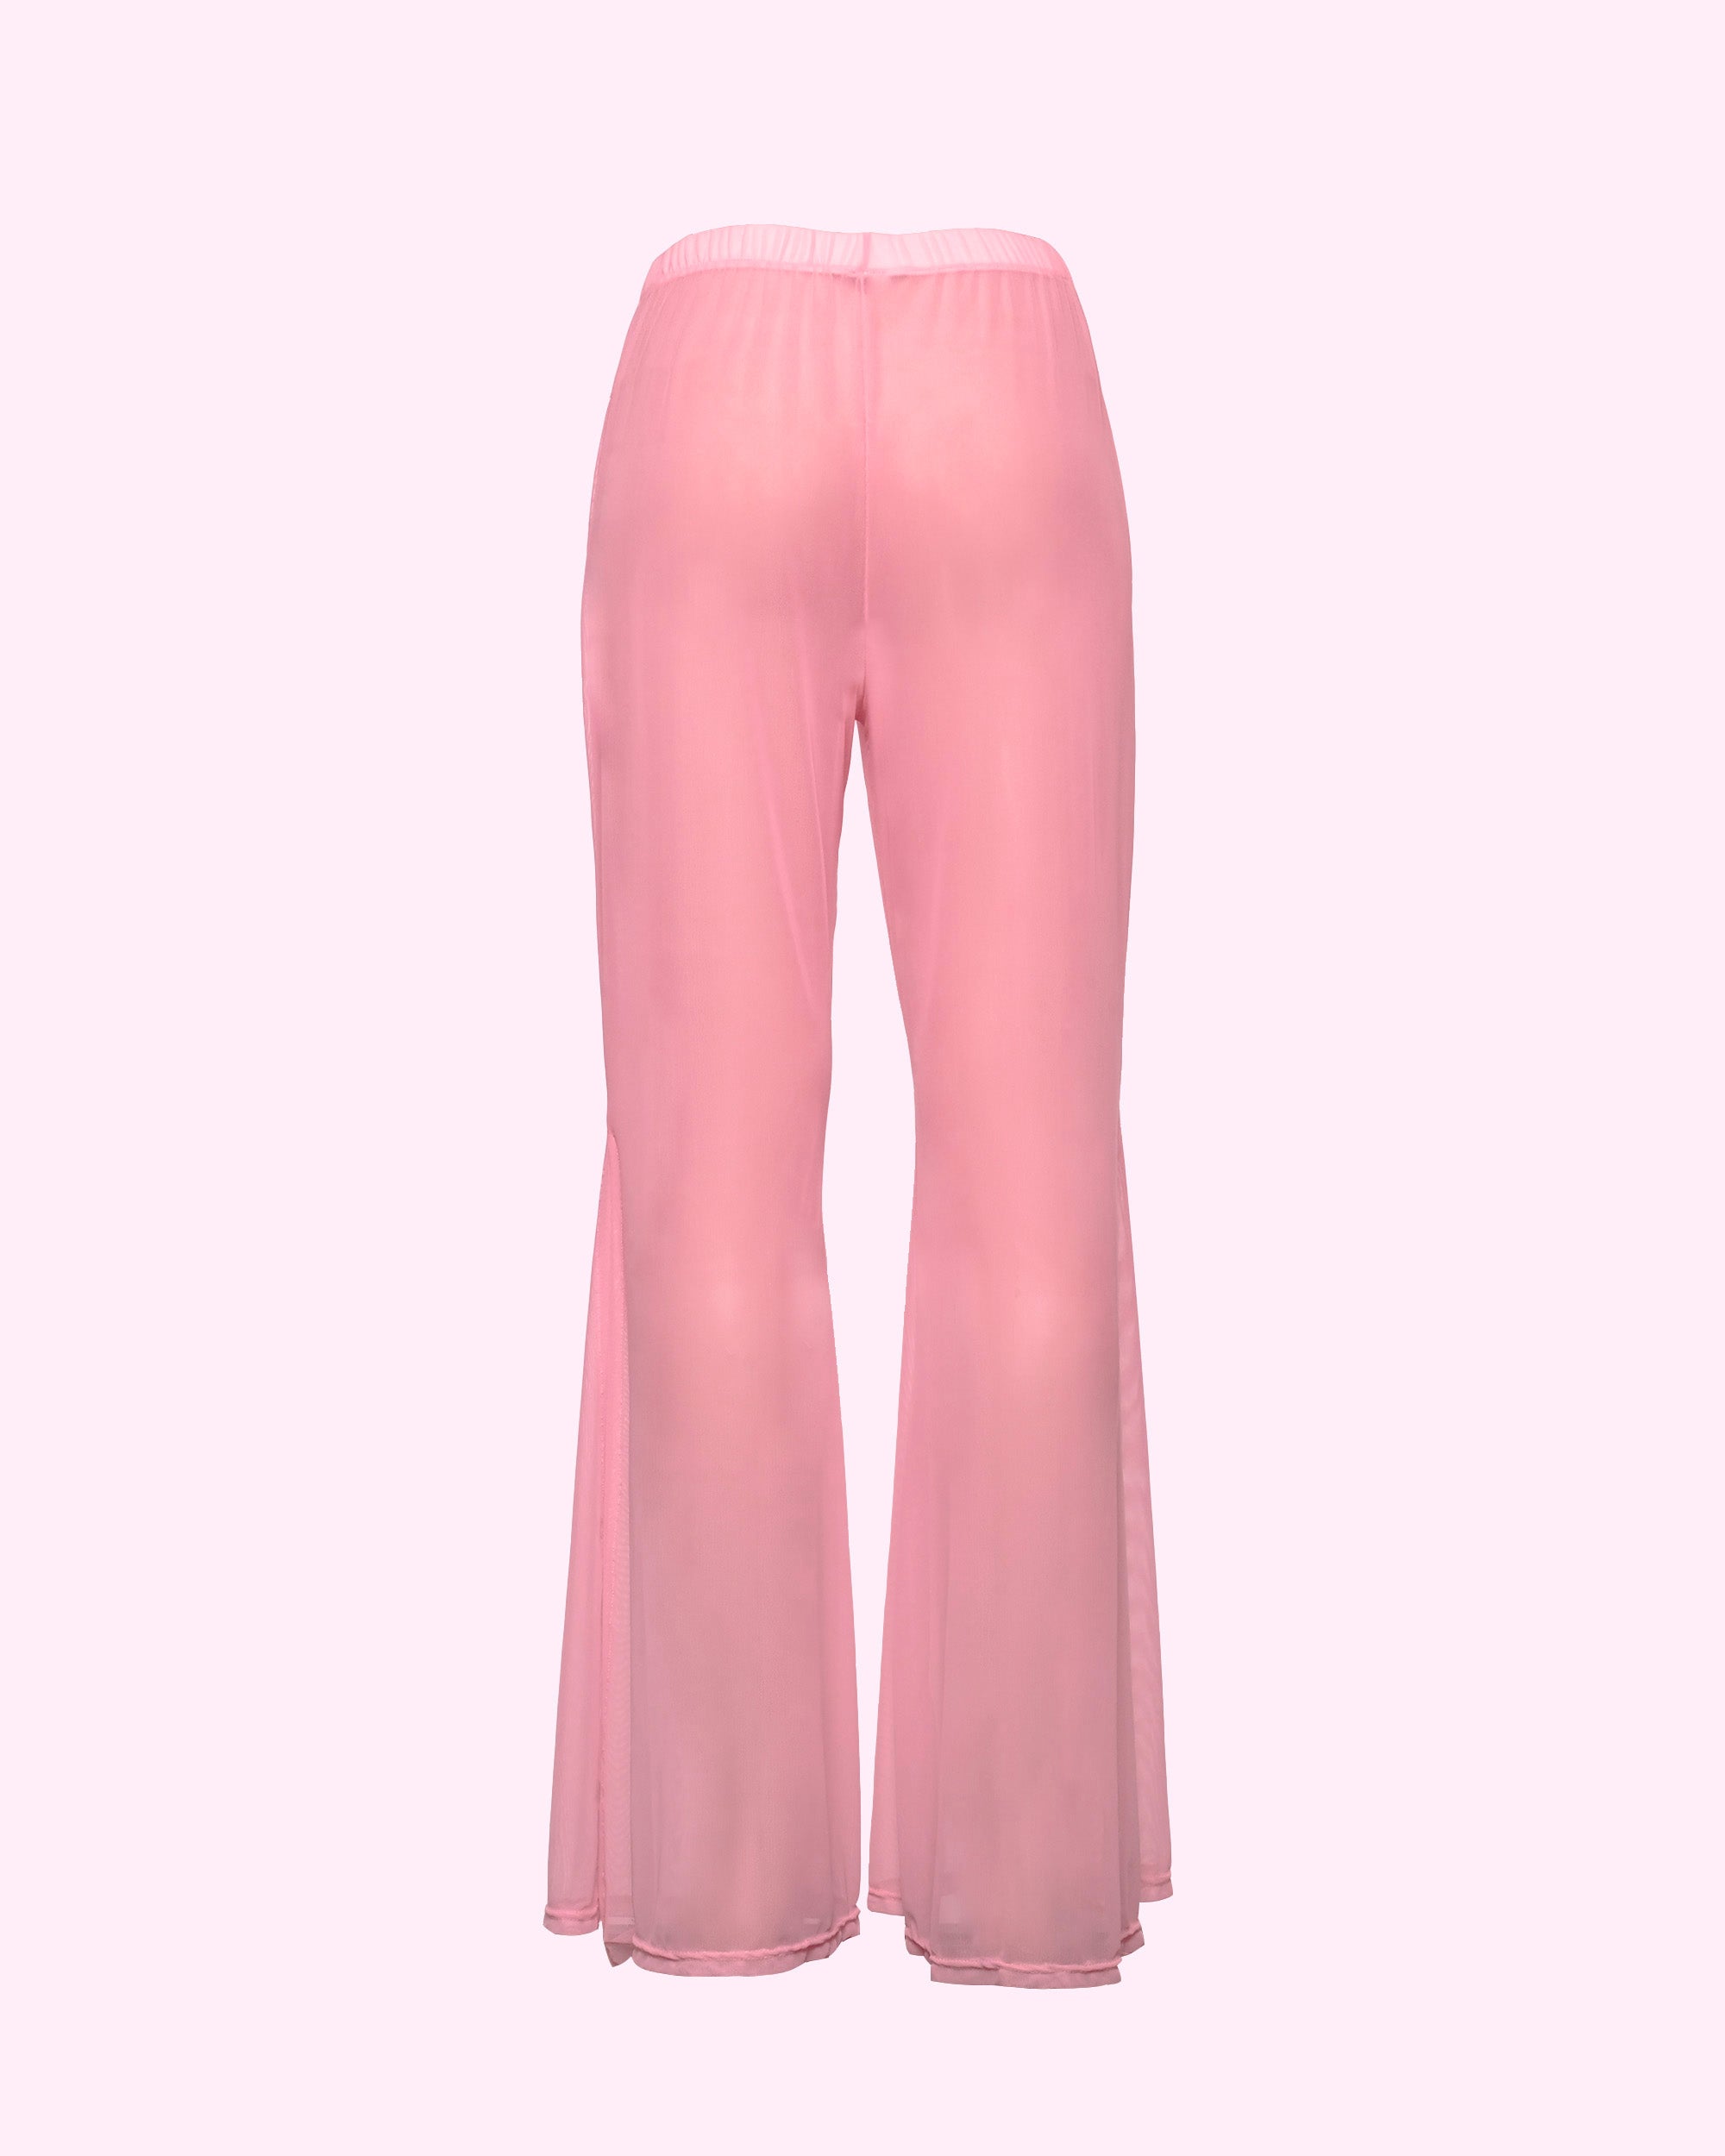 Sheer Pants ~ baby Pink